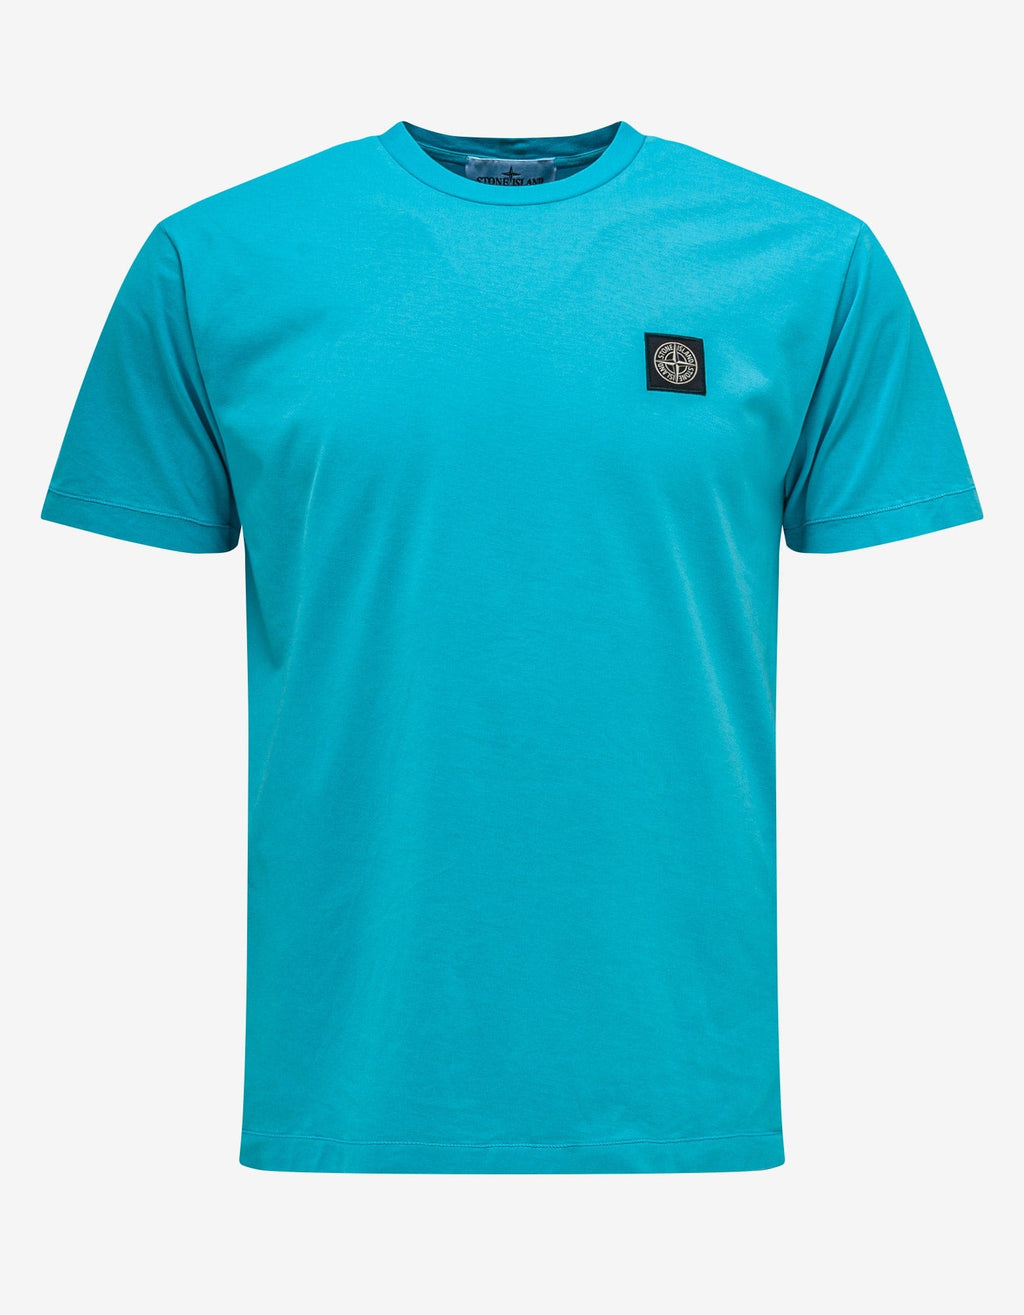 Stone Island Stone Island Turquoise Blue Compass Patch T-Shirt